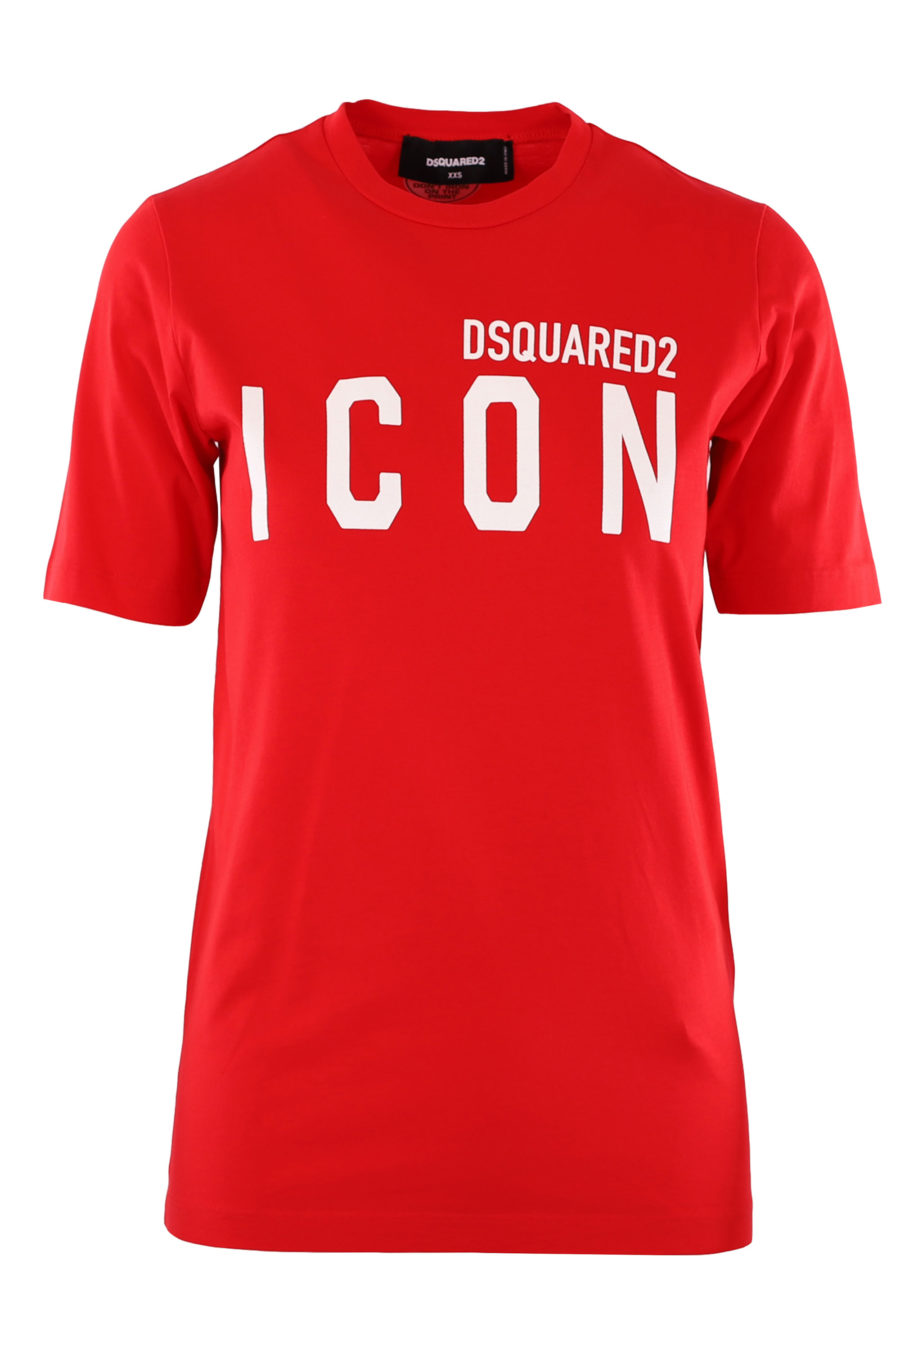 Camiseta roja con logo blanco "Icon" - IMG 9891